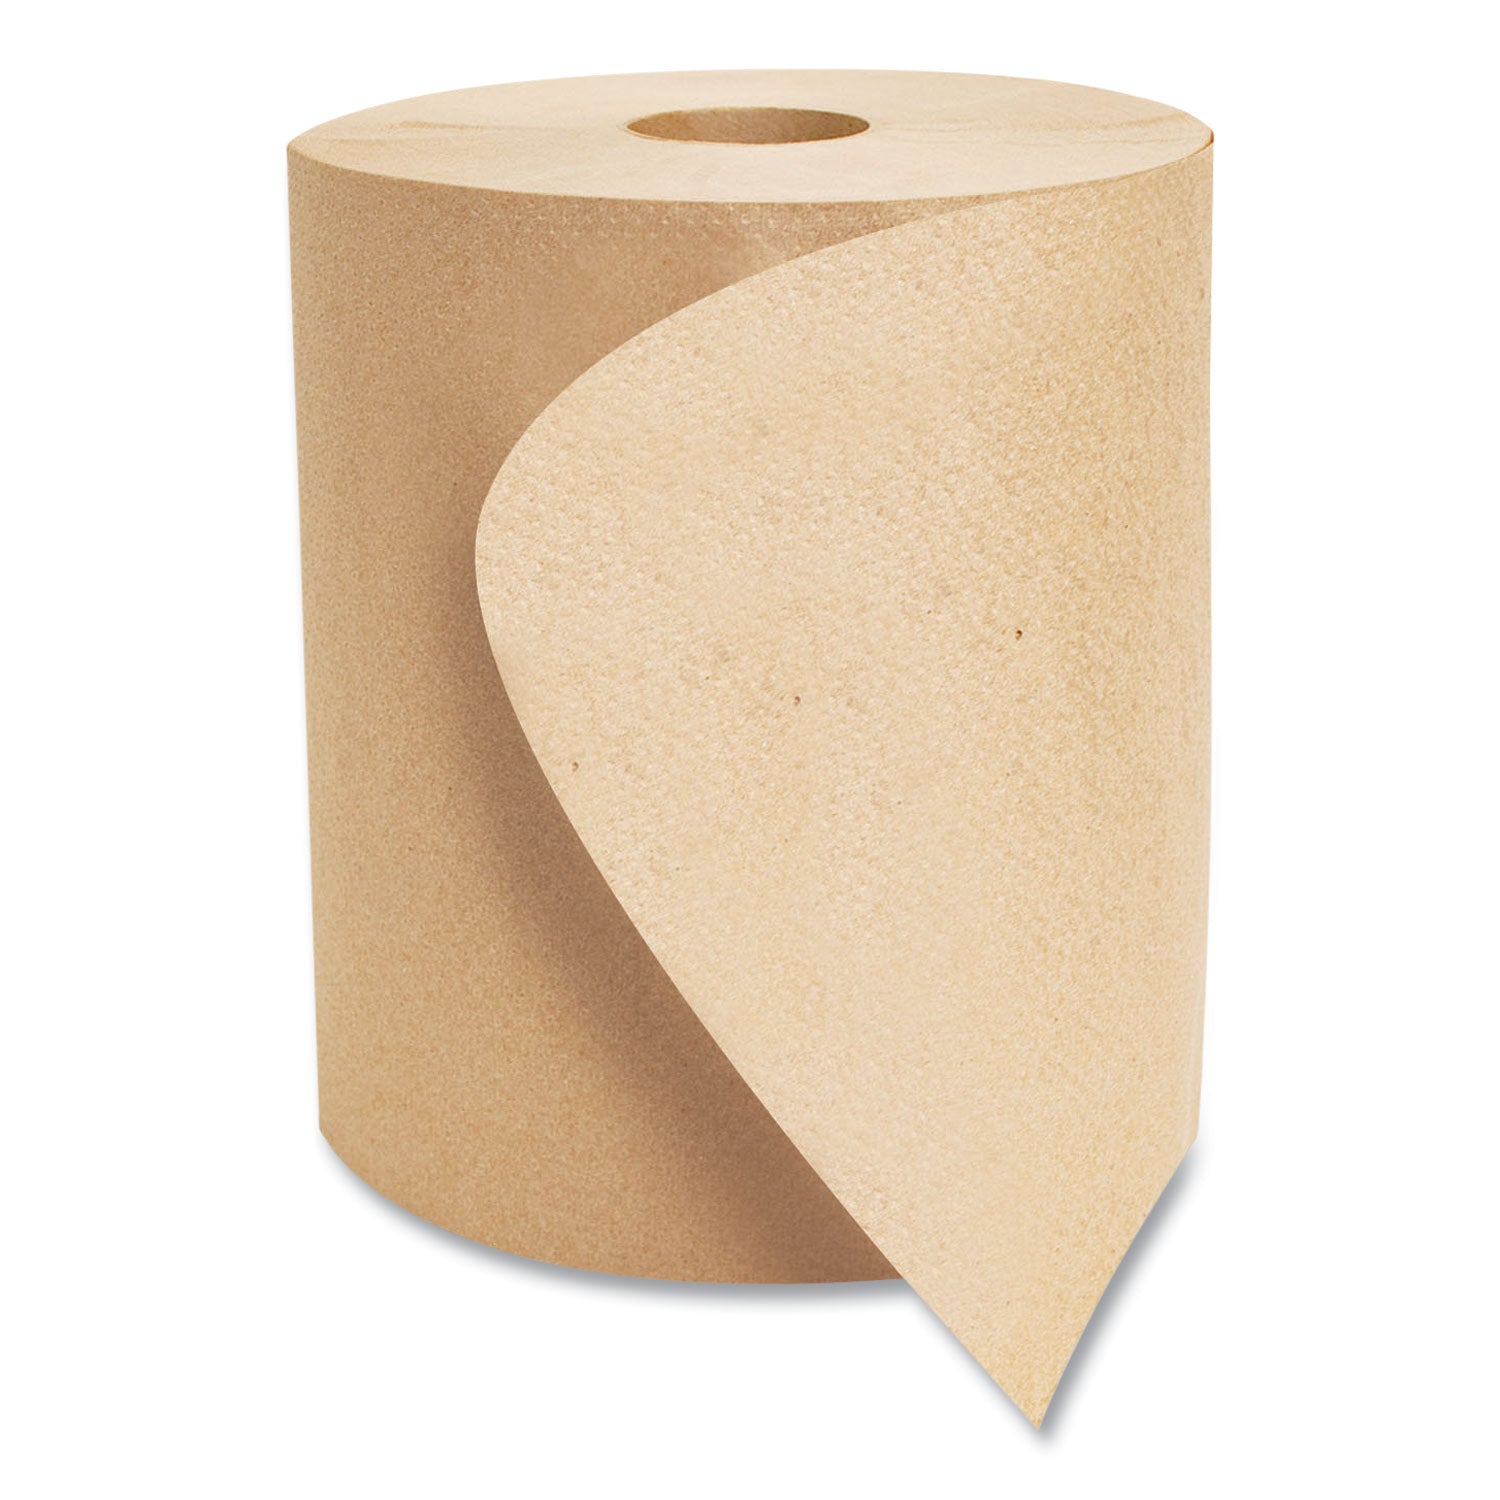 morsoft-universal-roll-towels-1-ply-8-x-800-ft-brown-6-rolls-carton_morr6800 - 6